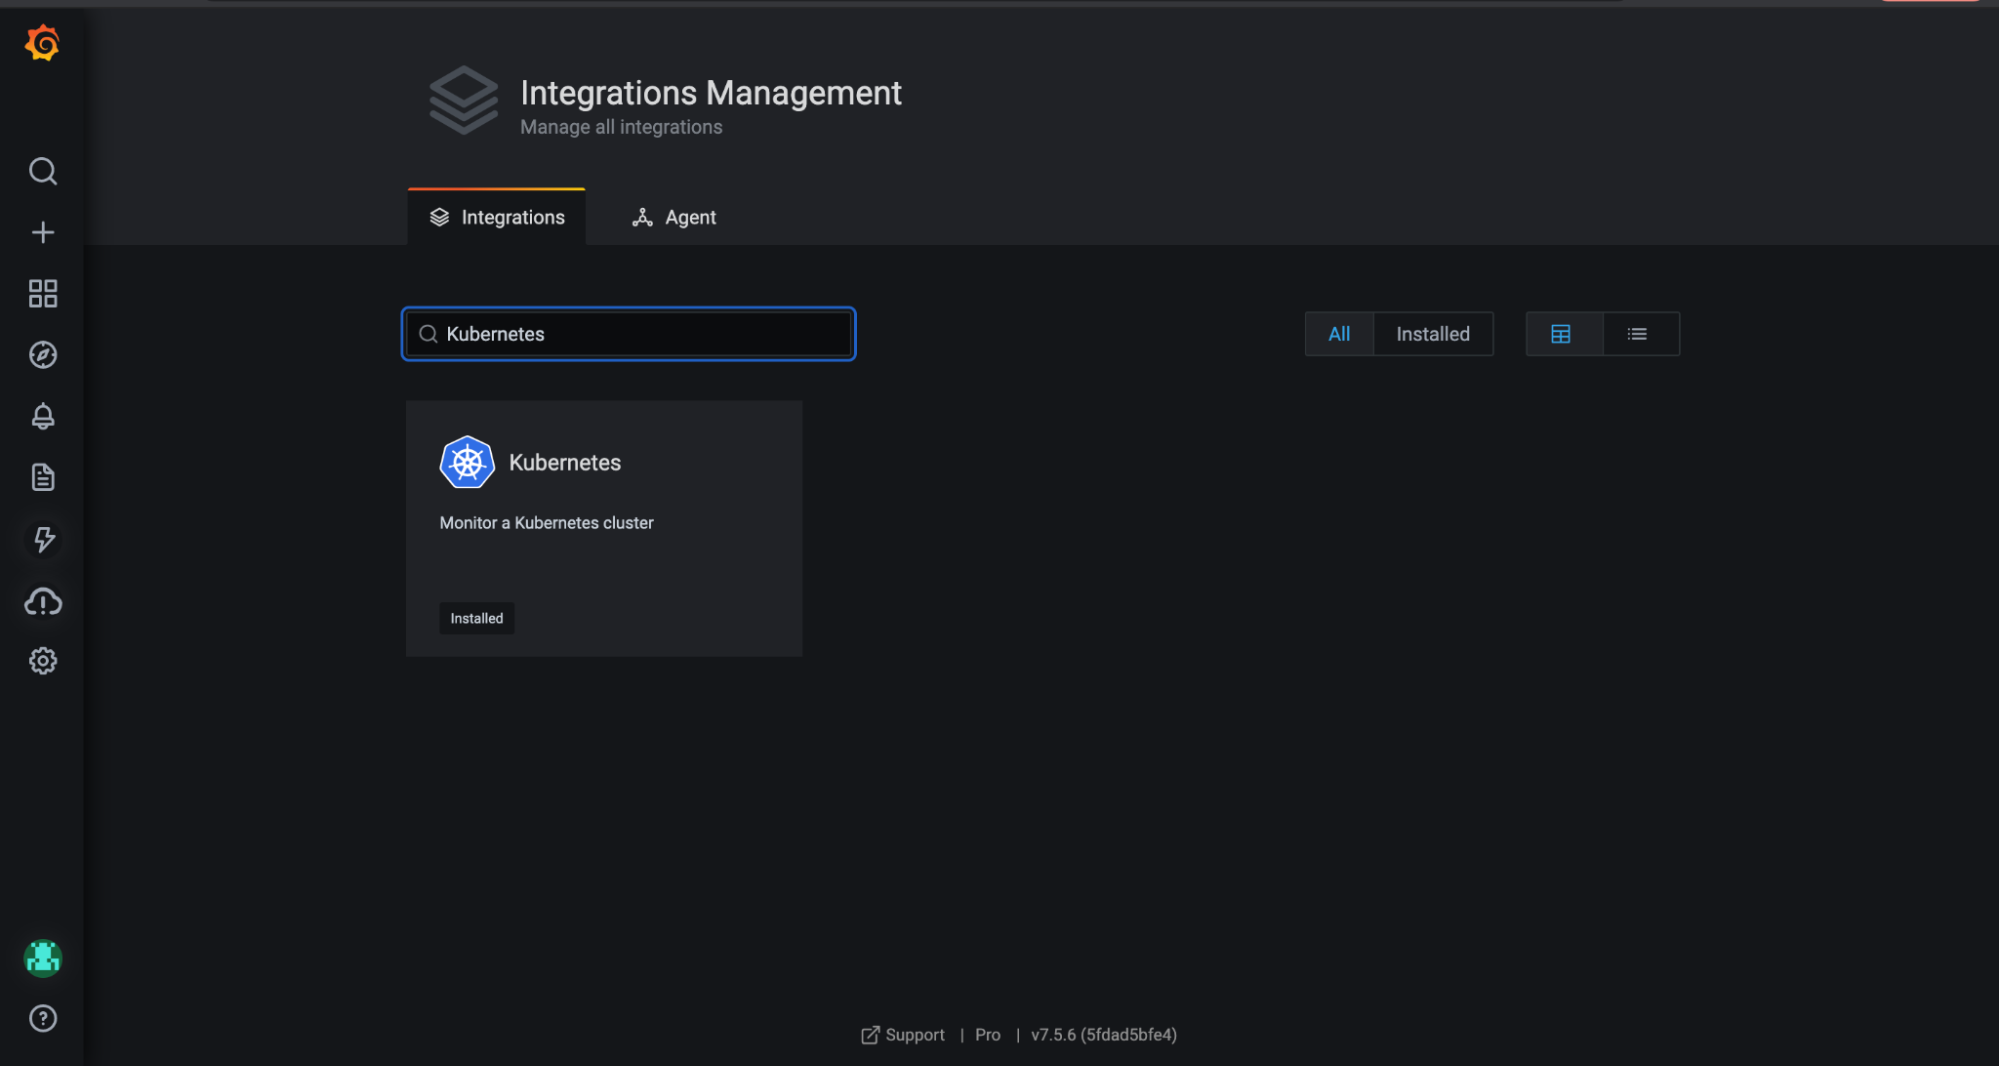 Grafana Cloud integration management UI